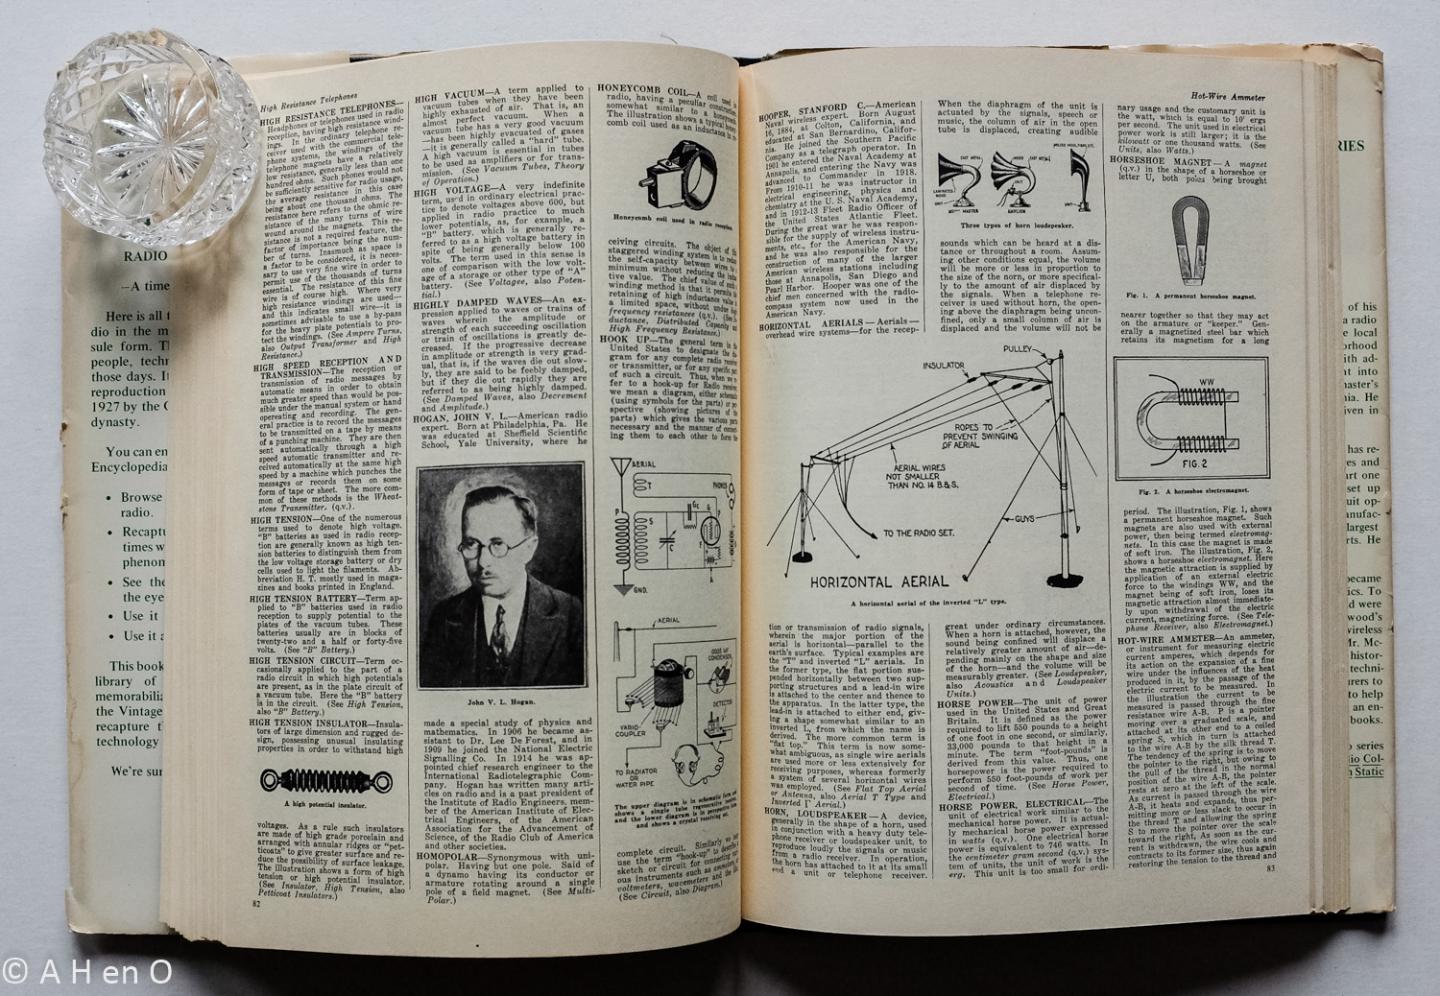 Gernsback, Sidney - S. Gernsback's radio encyclopedia 1927.